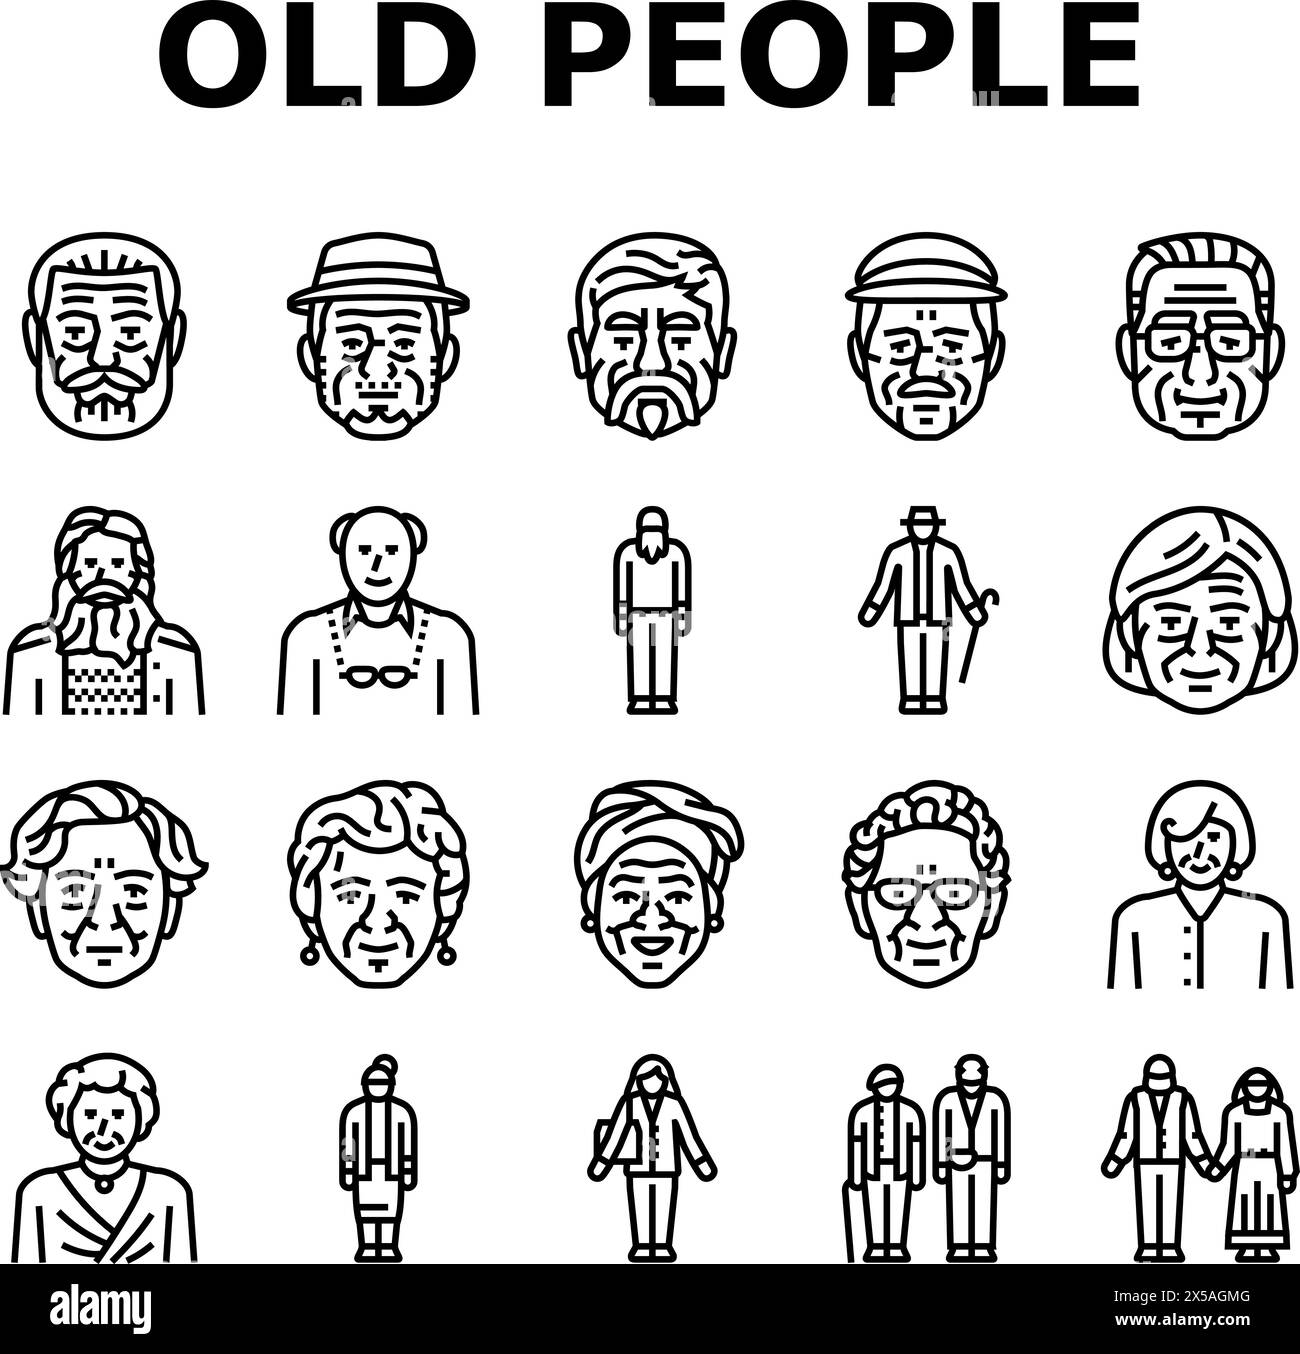 Alte Leute Senior glückliche Reife Symbole setzen Vektor Stock Vektor